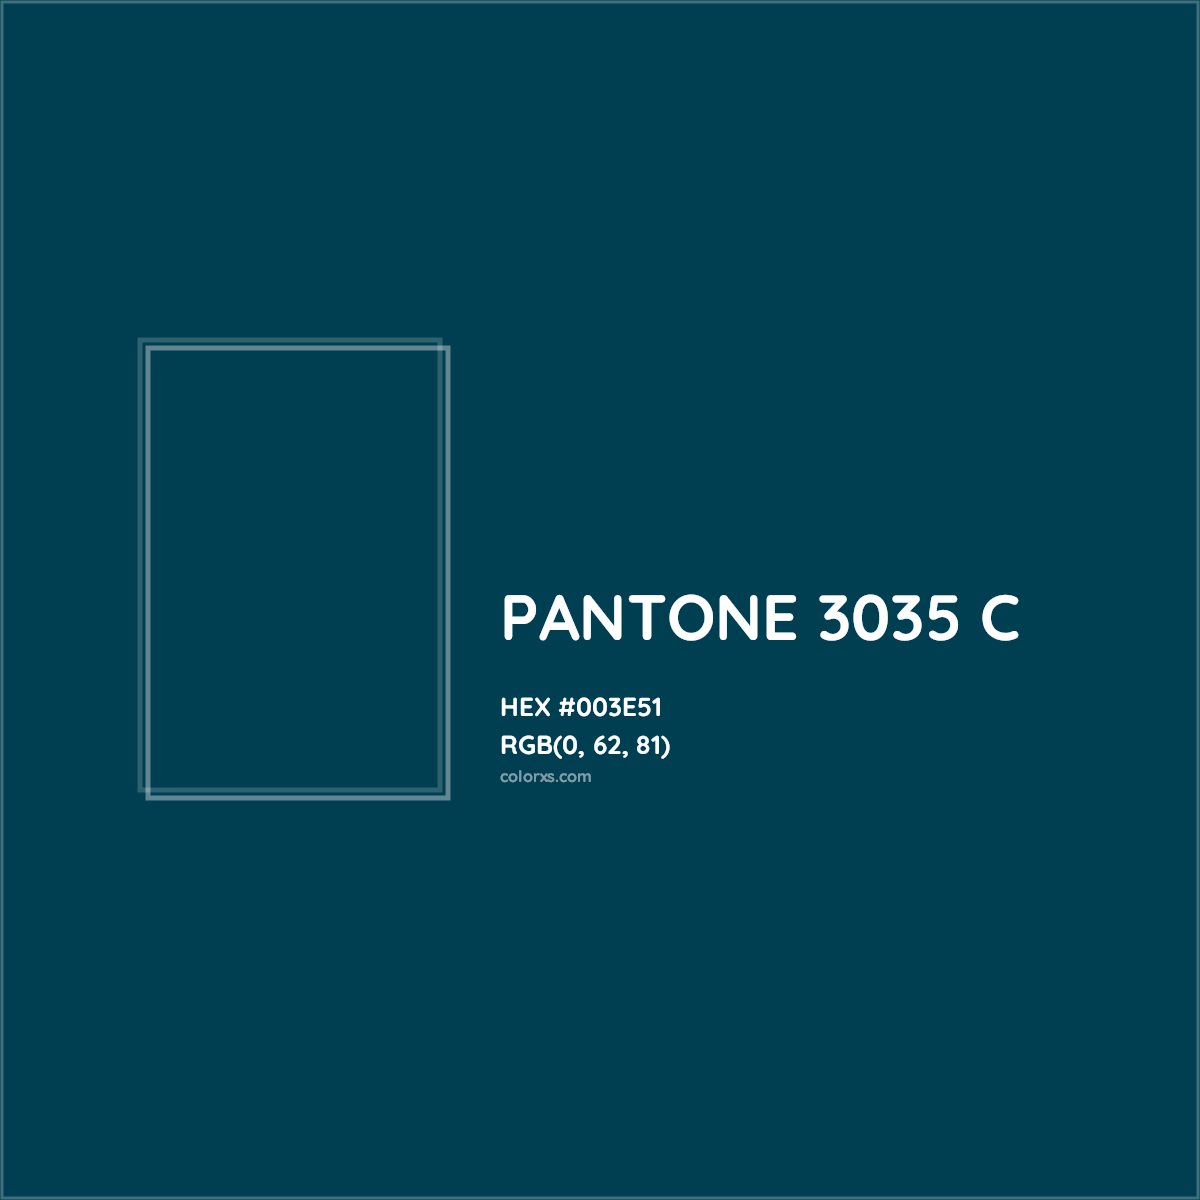 HEX #003E51 PANTONE 3035 C CMS Pantone PMS - Color Code